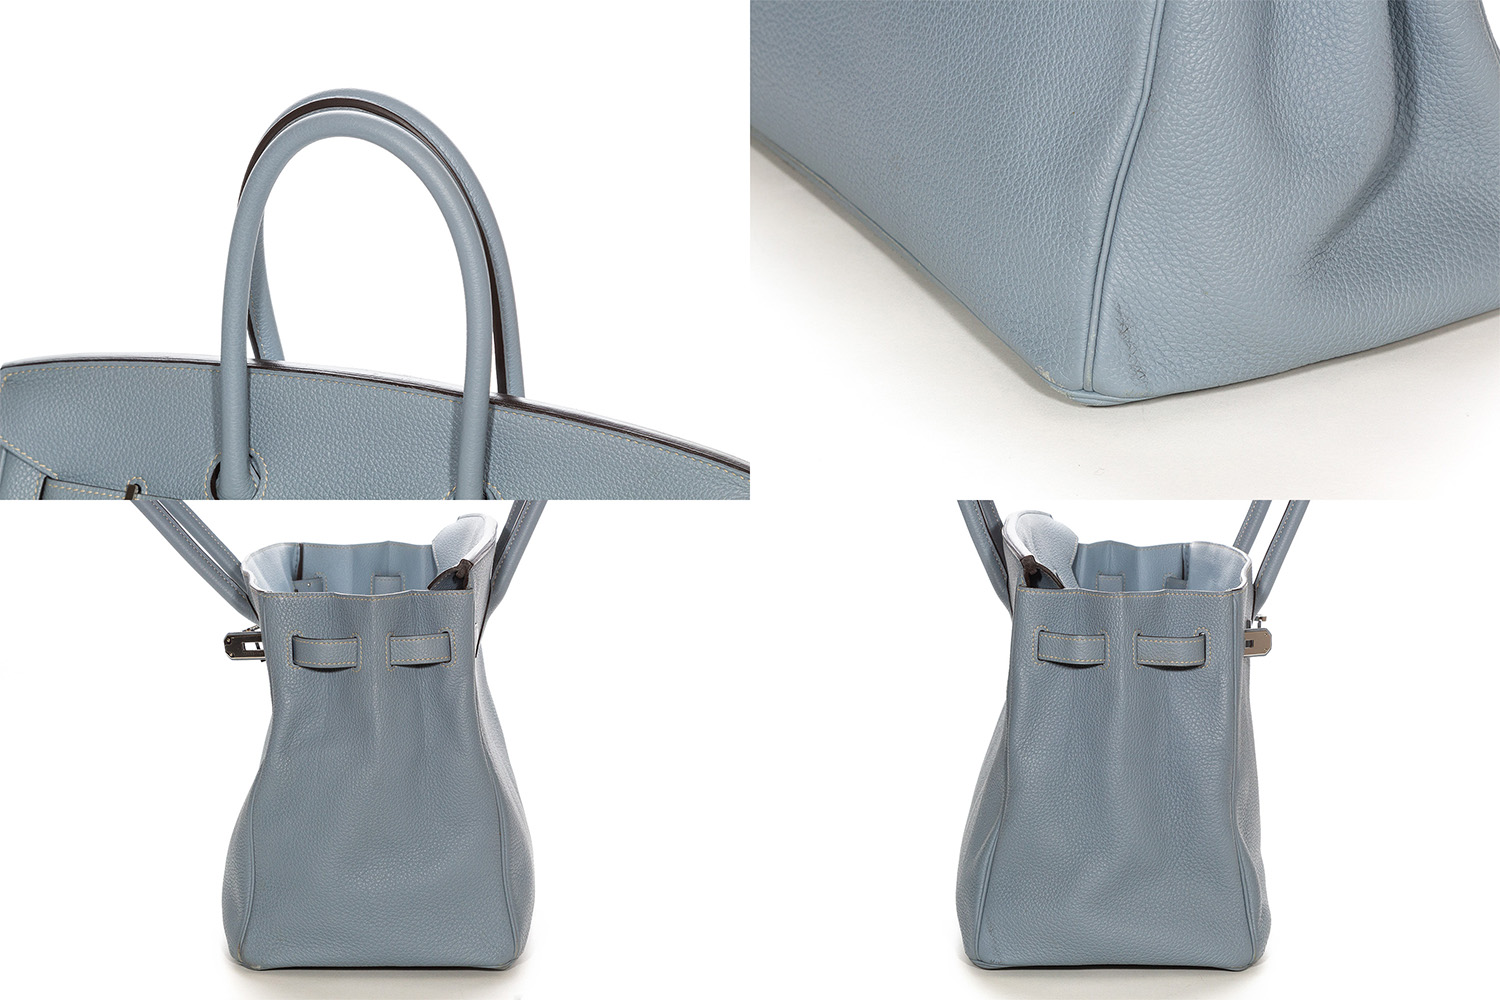 Authentic Hermes Birkin 35cm Bleu Lin Togo Leather Handbag Palladium -  Ideal Luxury